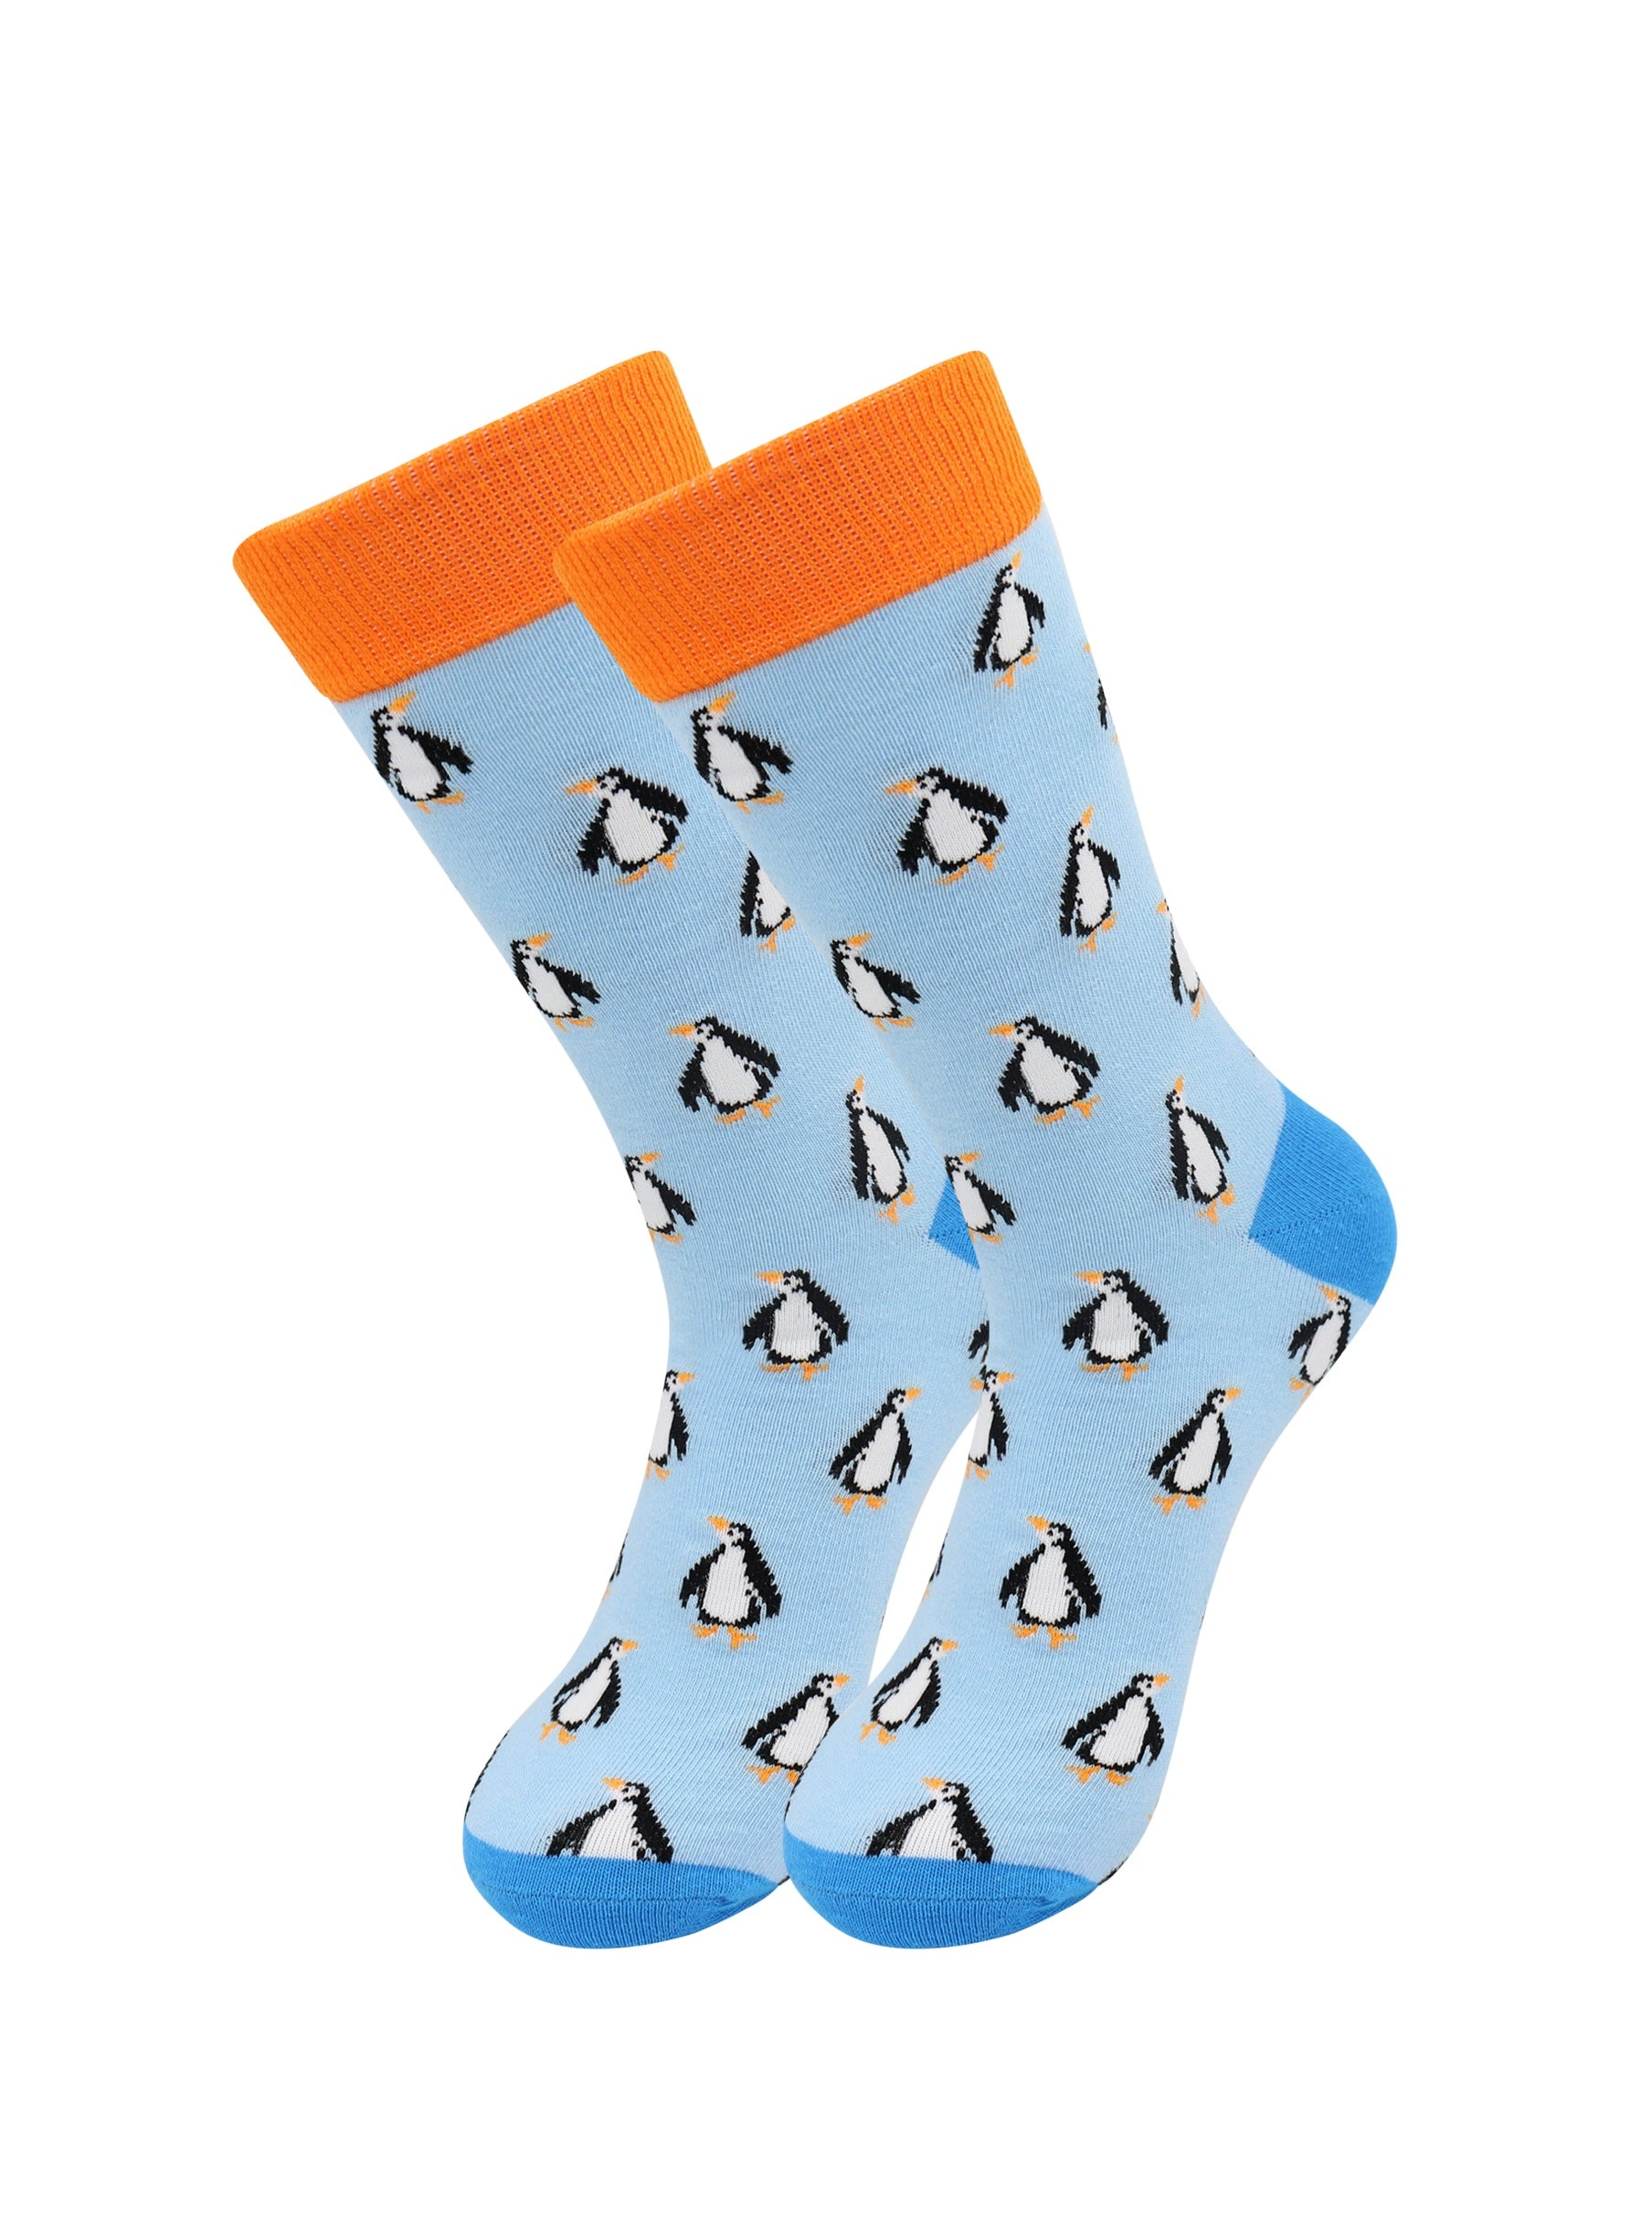 Pelican Socks - Comfy Cotton for Men & Women – Real Sic